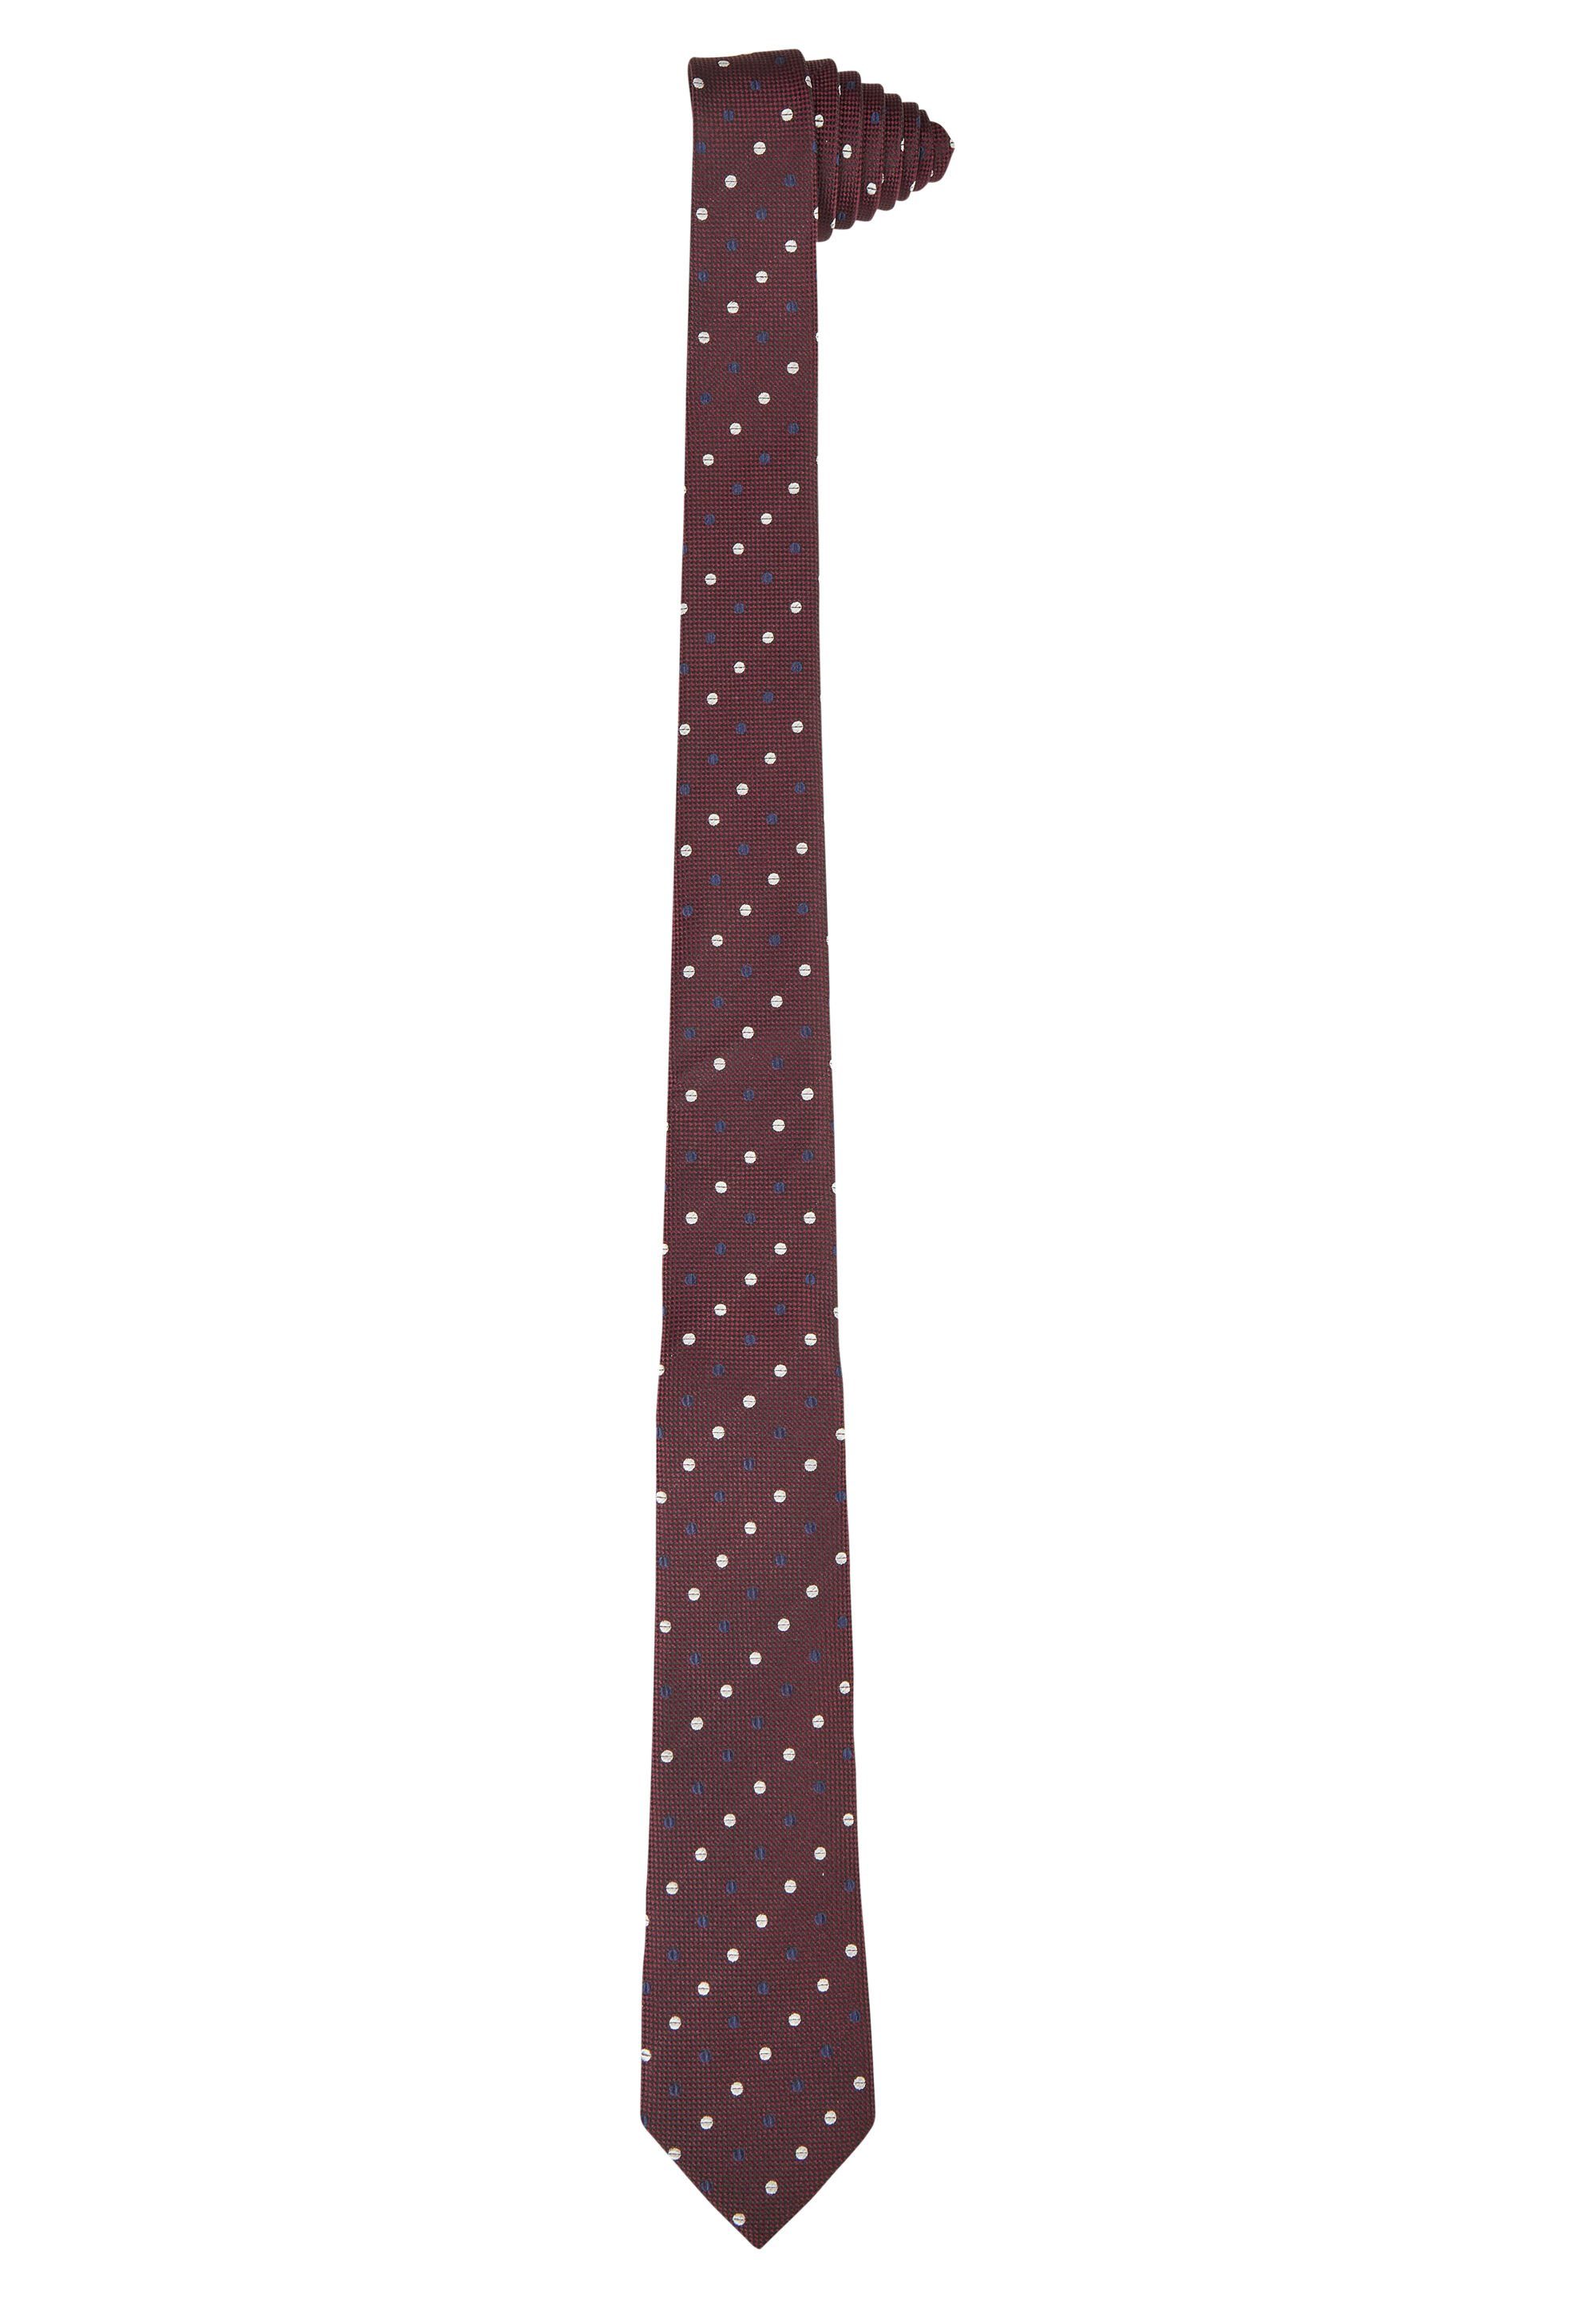 HECHTER PARIS Krawatte mit modernem Muster oxblood